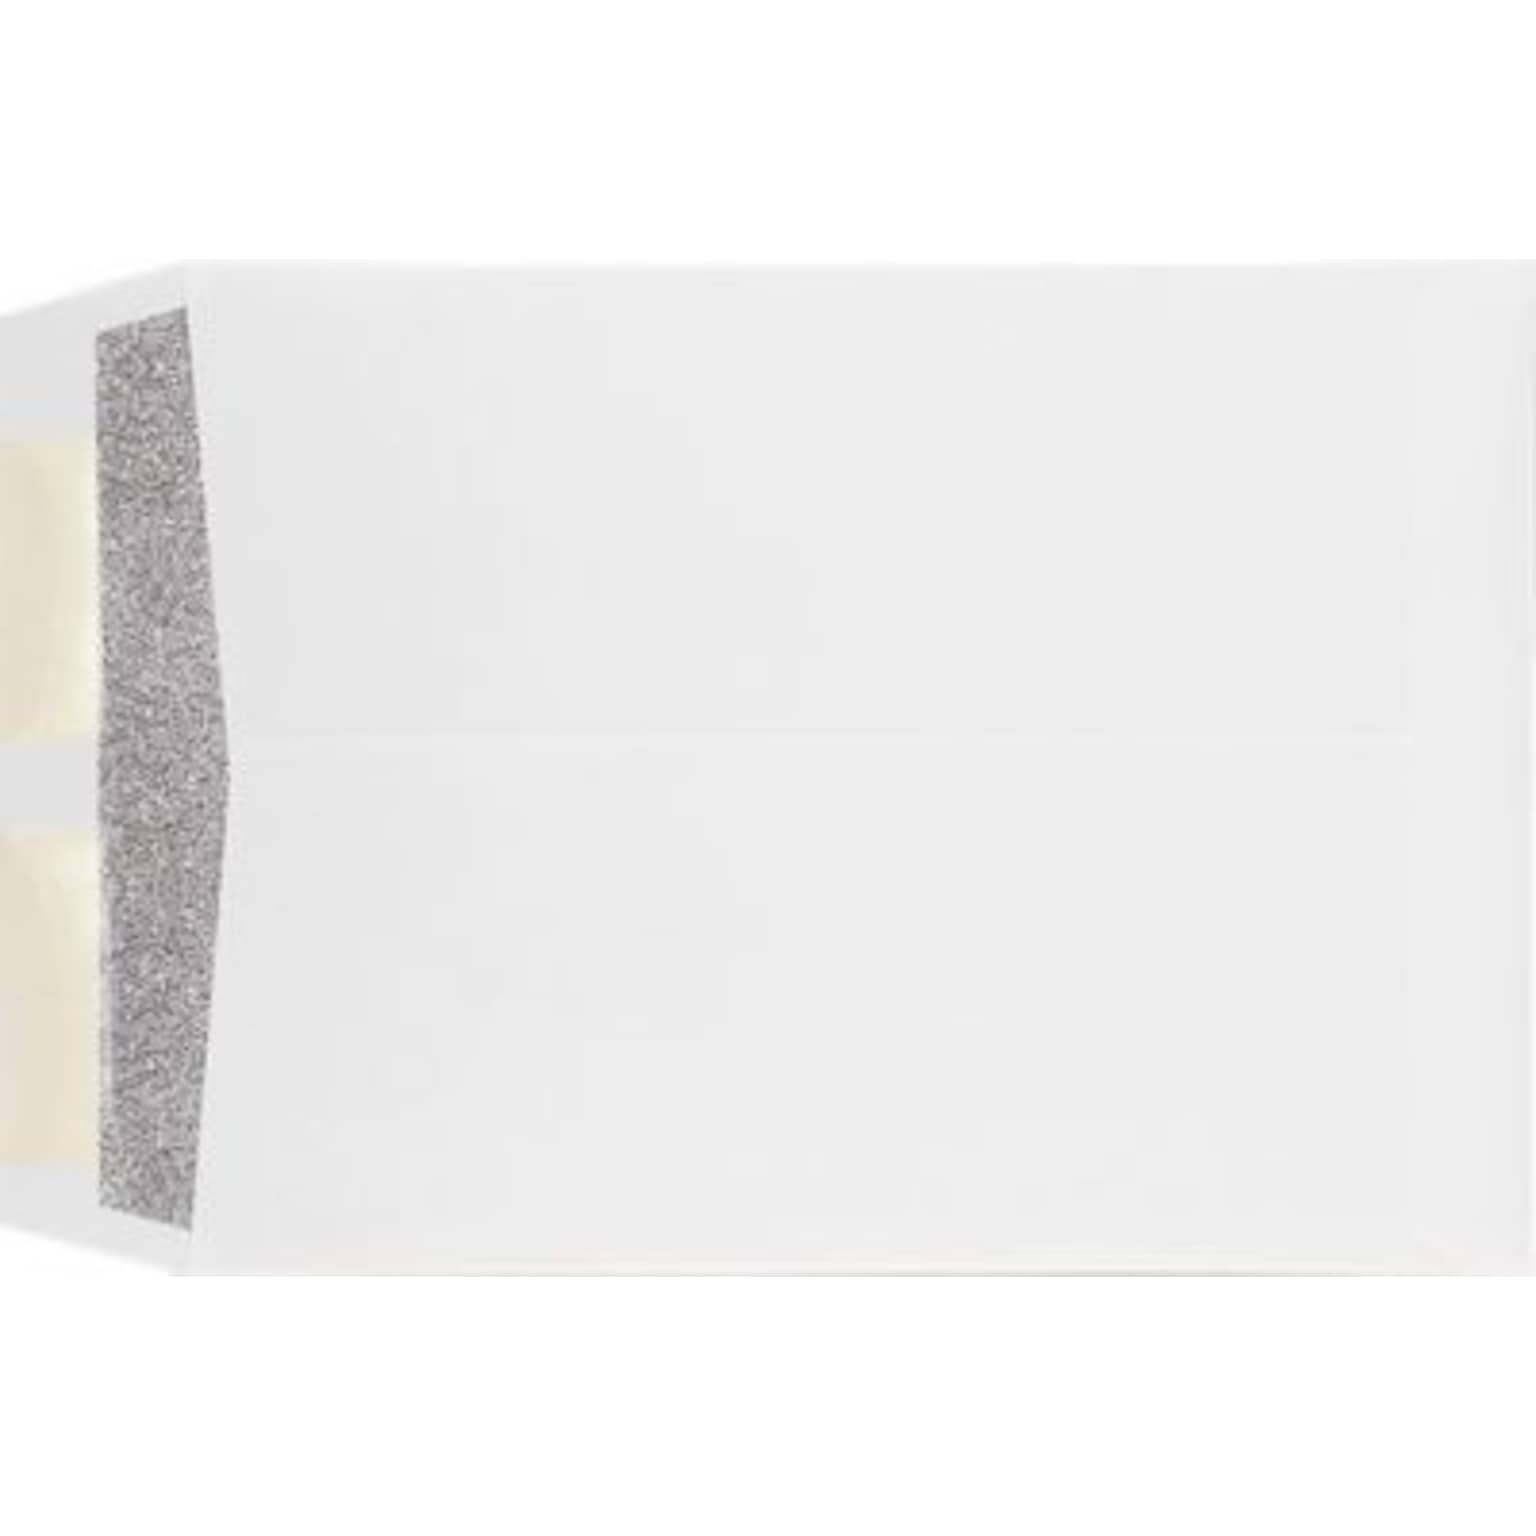 LUX 9 x 12 Open End Envelopes w/Security Tint, 28lb. White, 50/Box (WS-4894-ST-50)